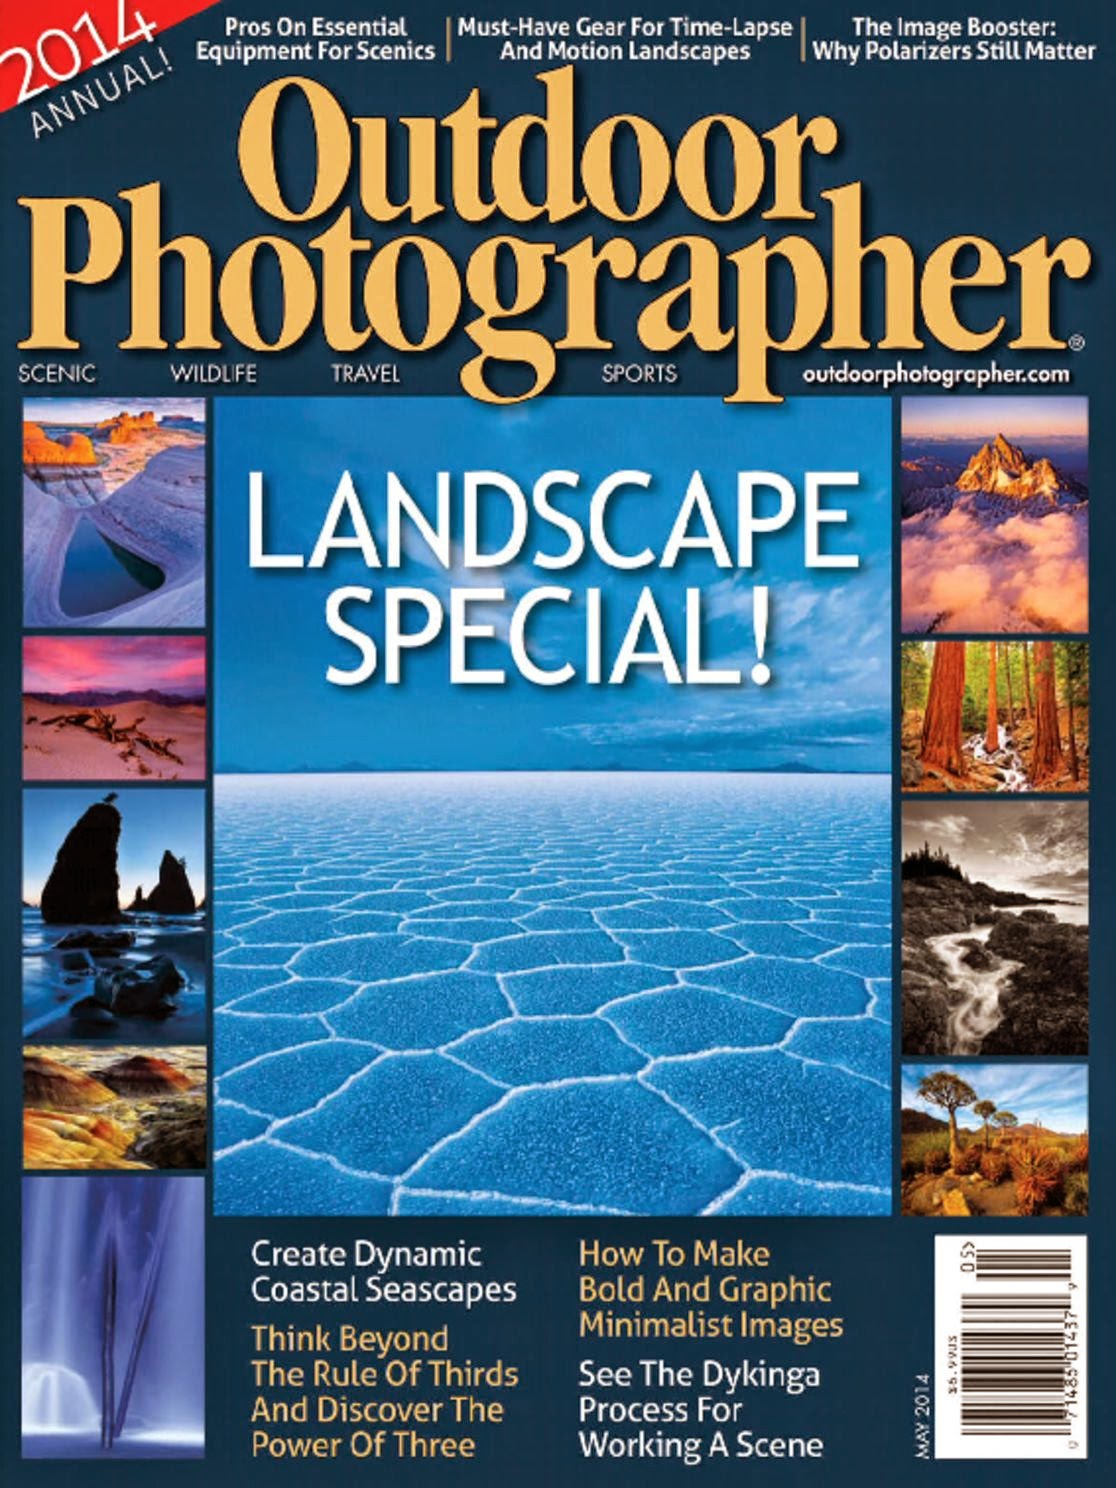 Coupon STL: Outdoor Photographer Magazine Subscription - $3.39/year (95% savings)